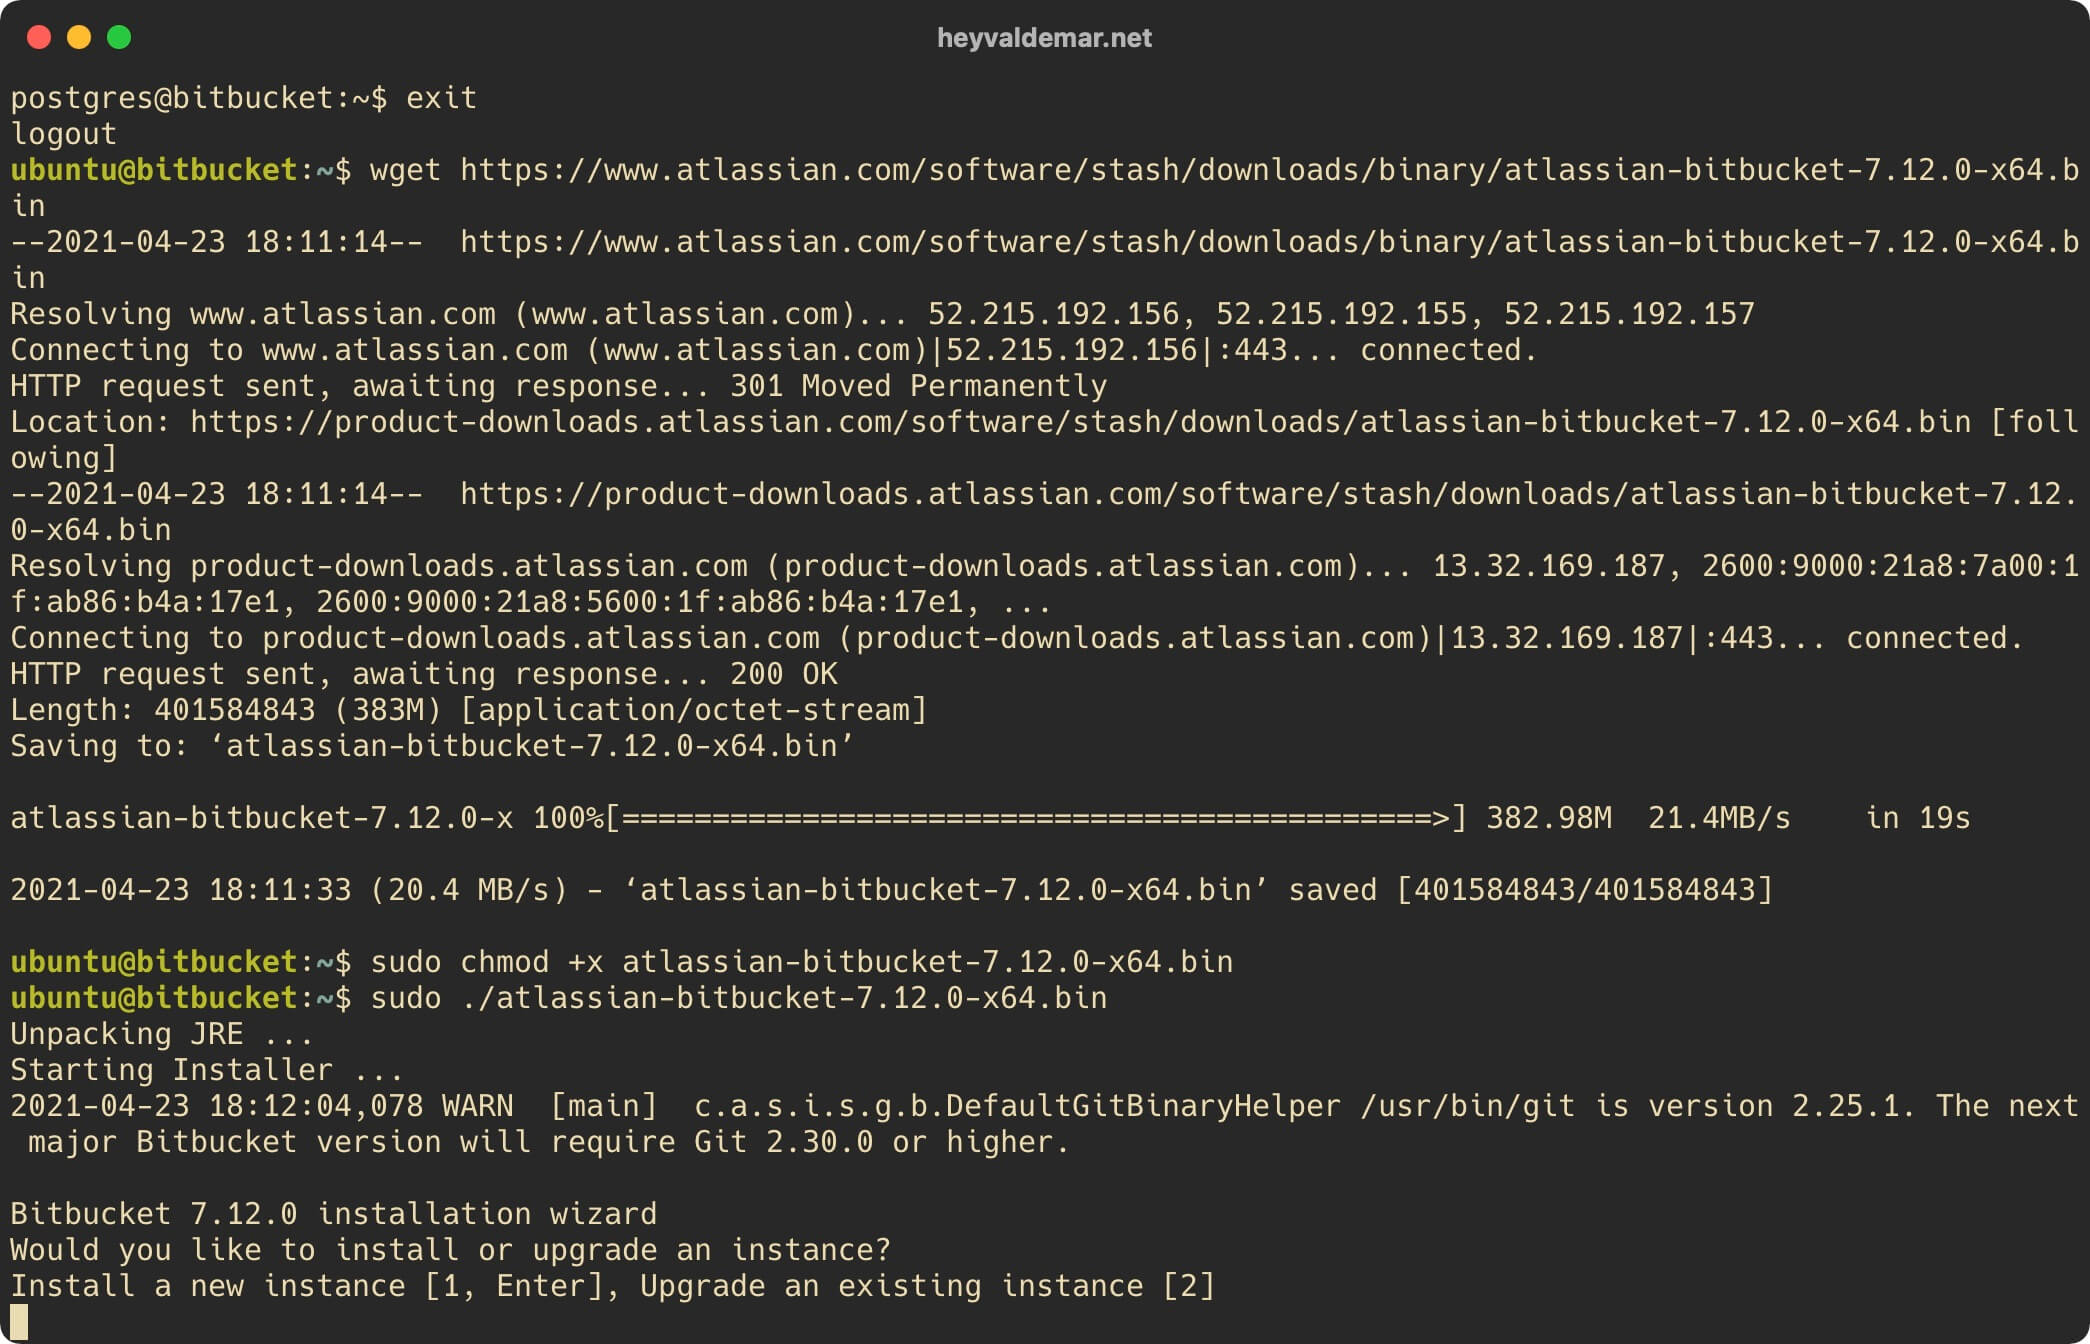 Install Bitbucket on Ubuntu Server